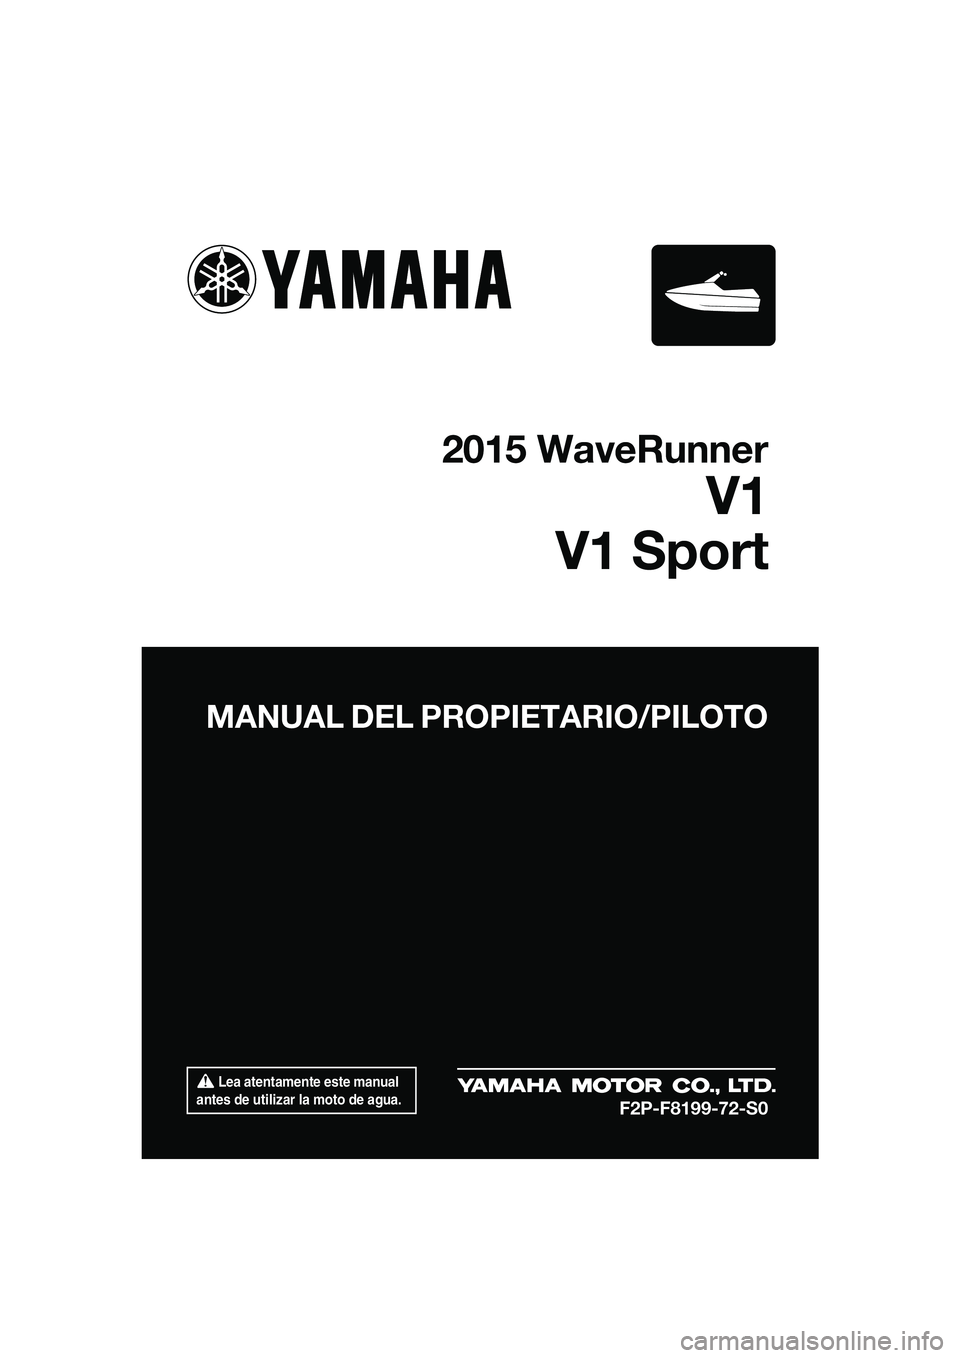 YAMAHA V1 2015  Manuale de Empleo (in Spanish)  Lea atentamente este manual 
antes de utilizar la moto de agua.
MANUAL DEL PROPIETARIO/PILOTO
2015 WaveRunner
V1
V1 Sport
F2P-F8199-72-S0
UF2P72S0.book  Page 1  Tuesday, August 19, 2014  11:07 AM 